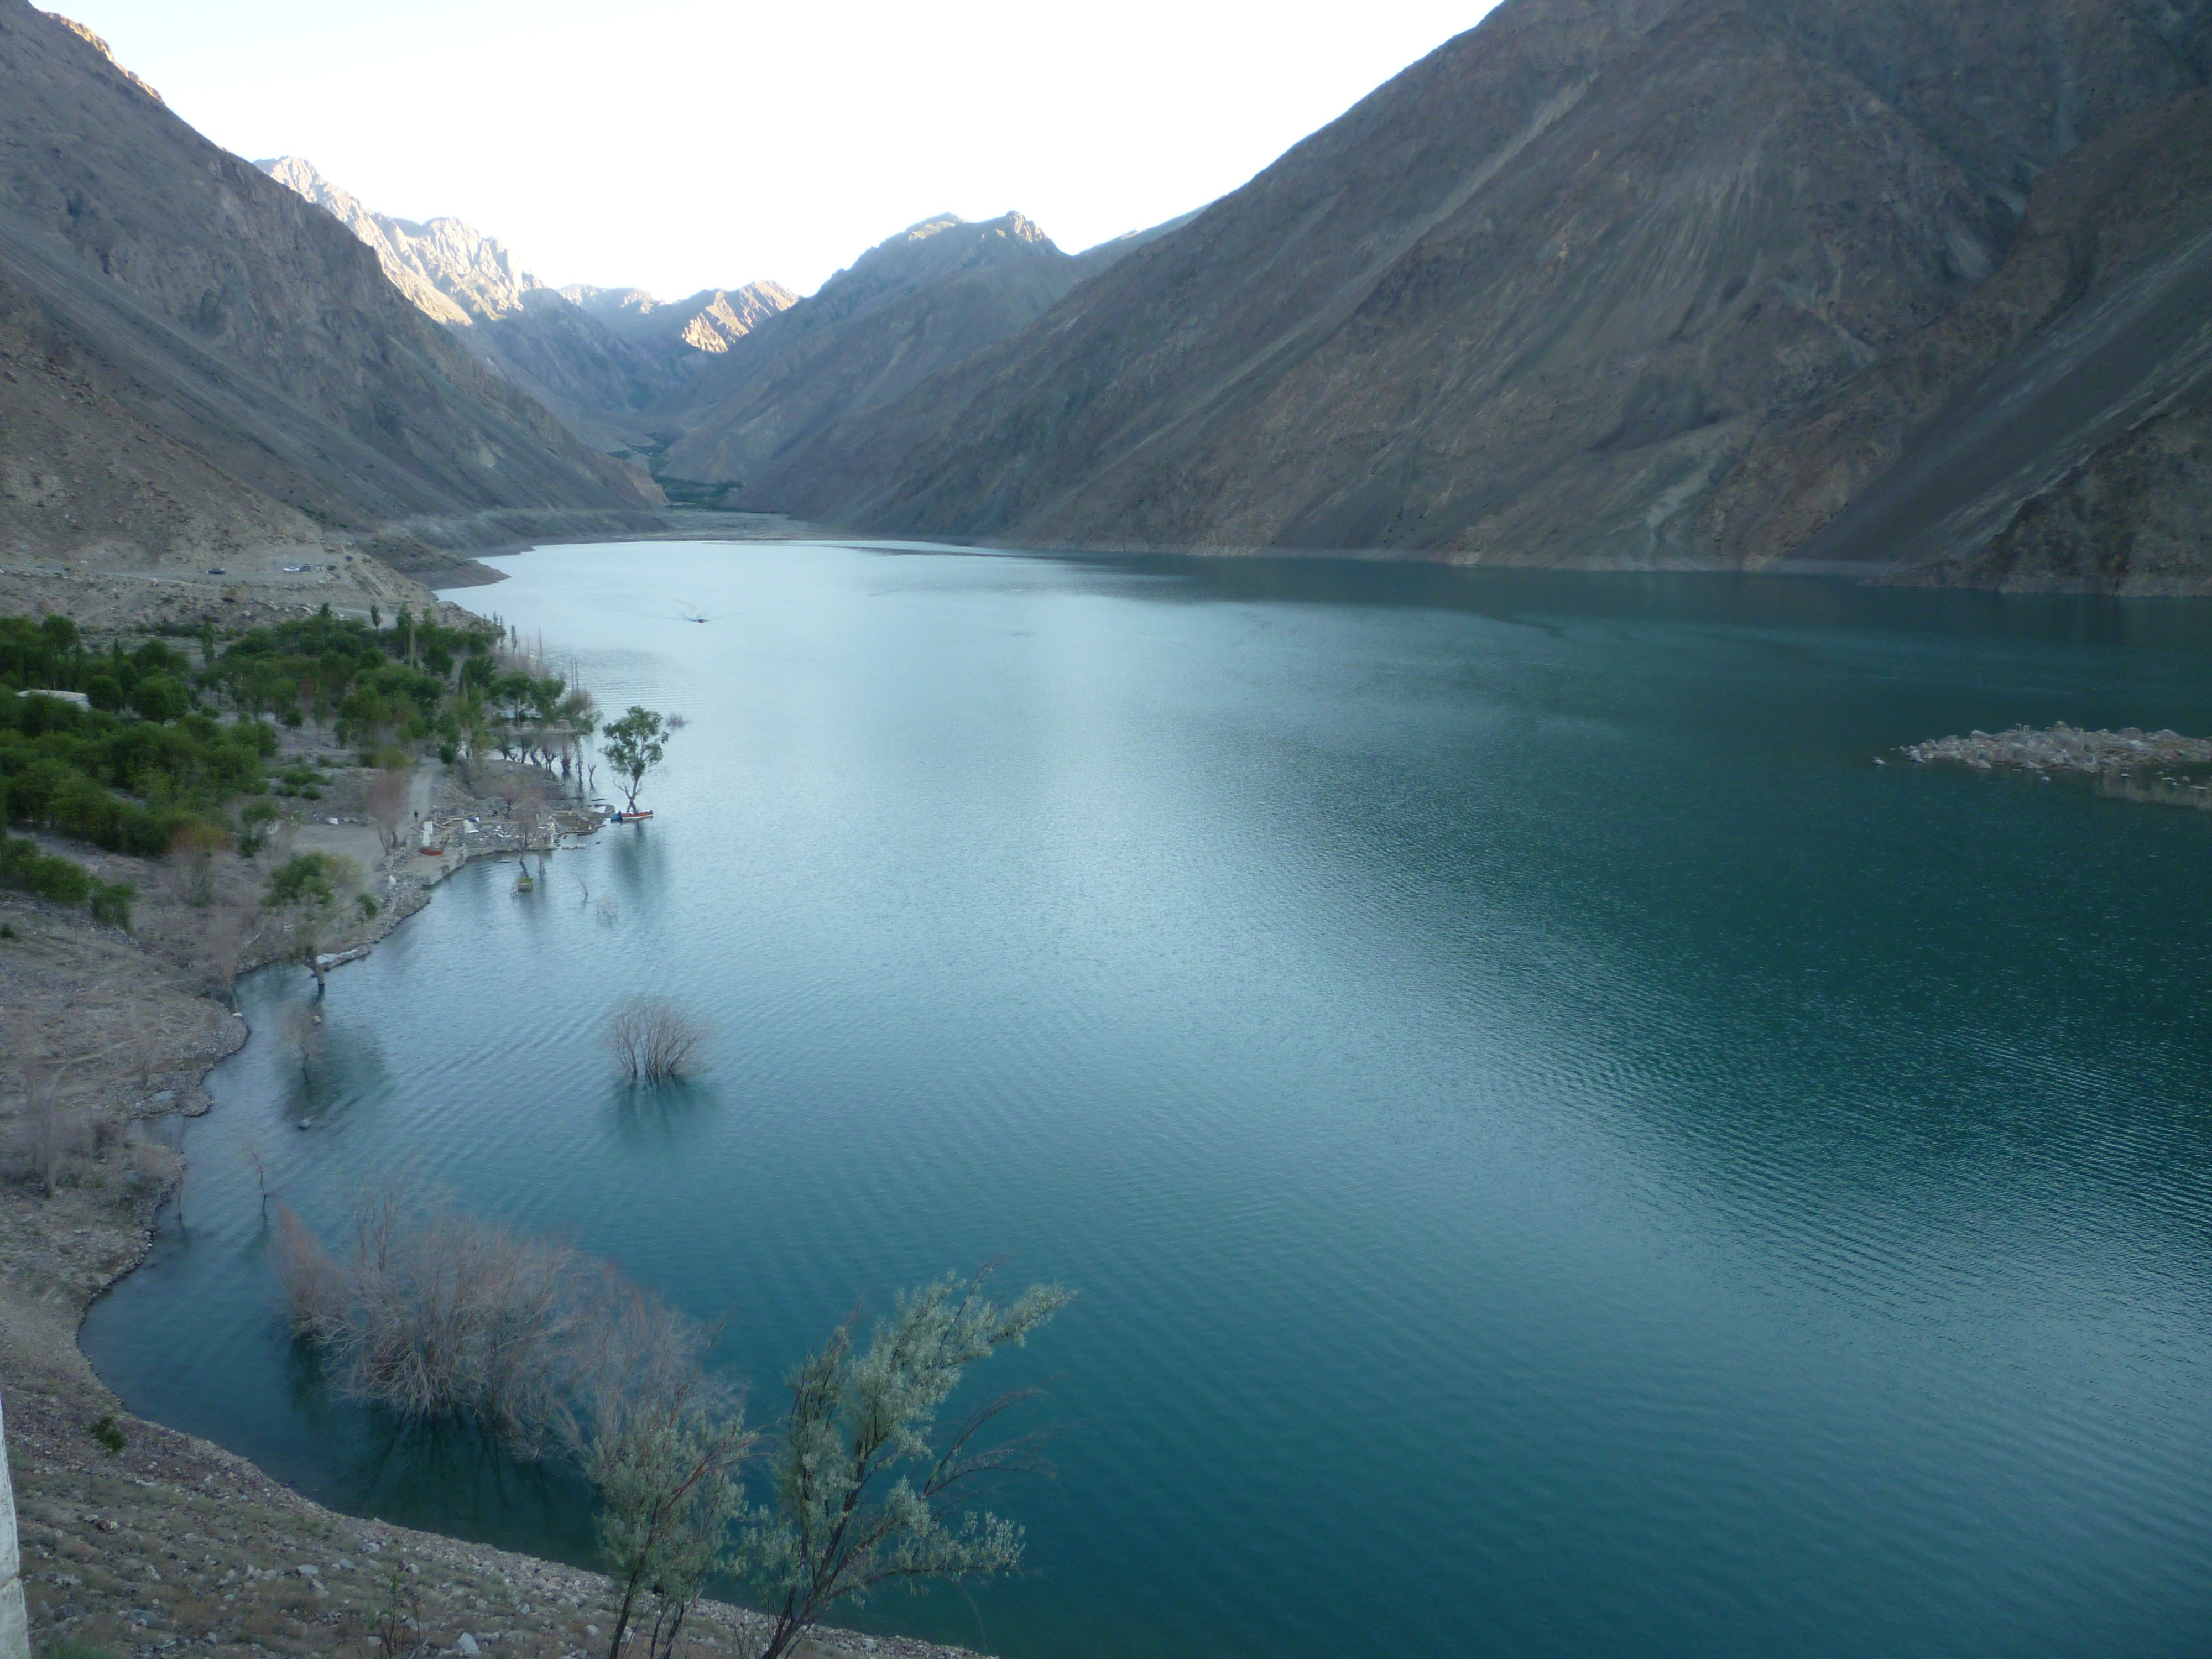 Indus_River_(Gilgit-baltistan,_Pakistan).JPG